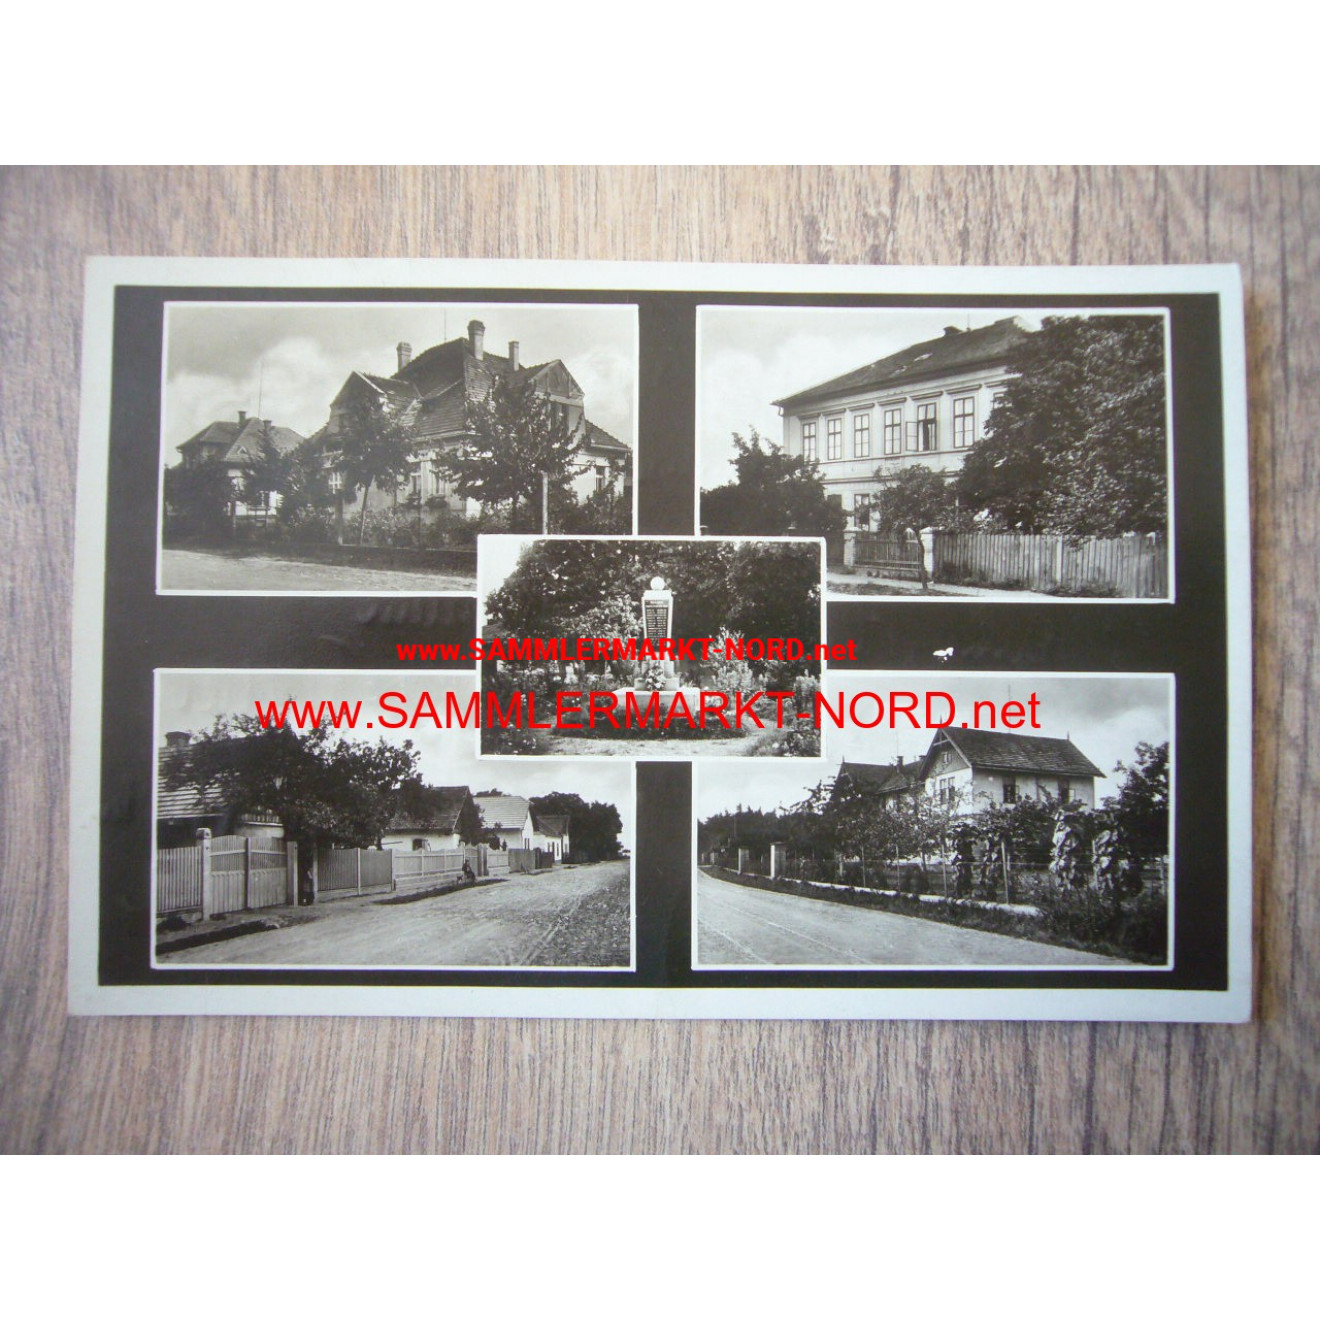 Truppenlager Lipnik (Sudetenland) - Postkarte